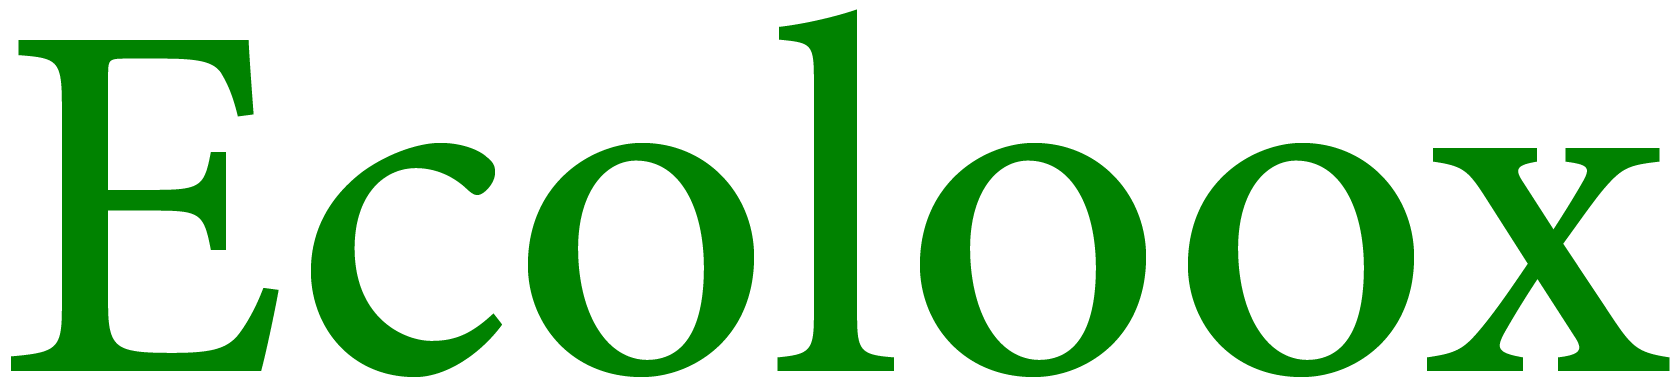 Ecoloox logo